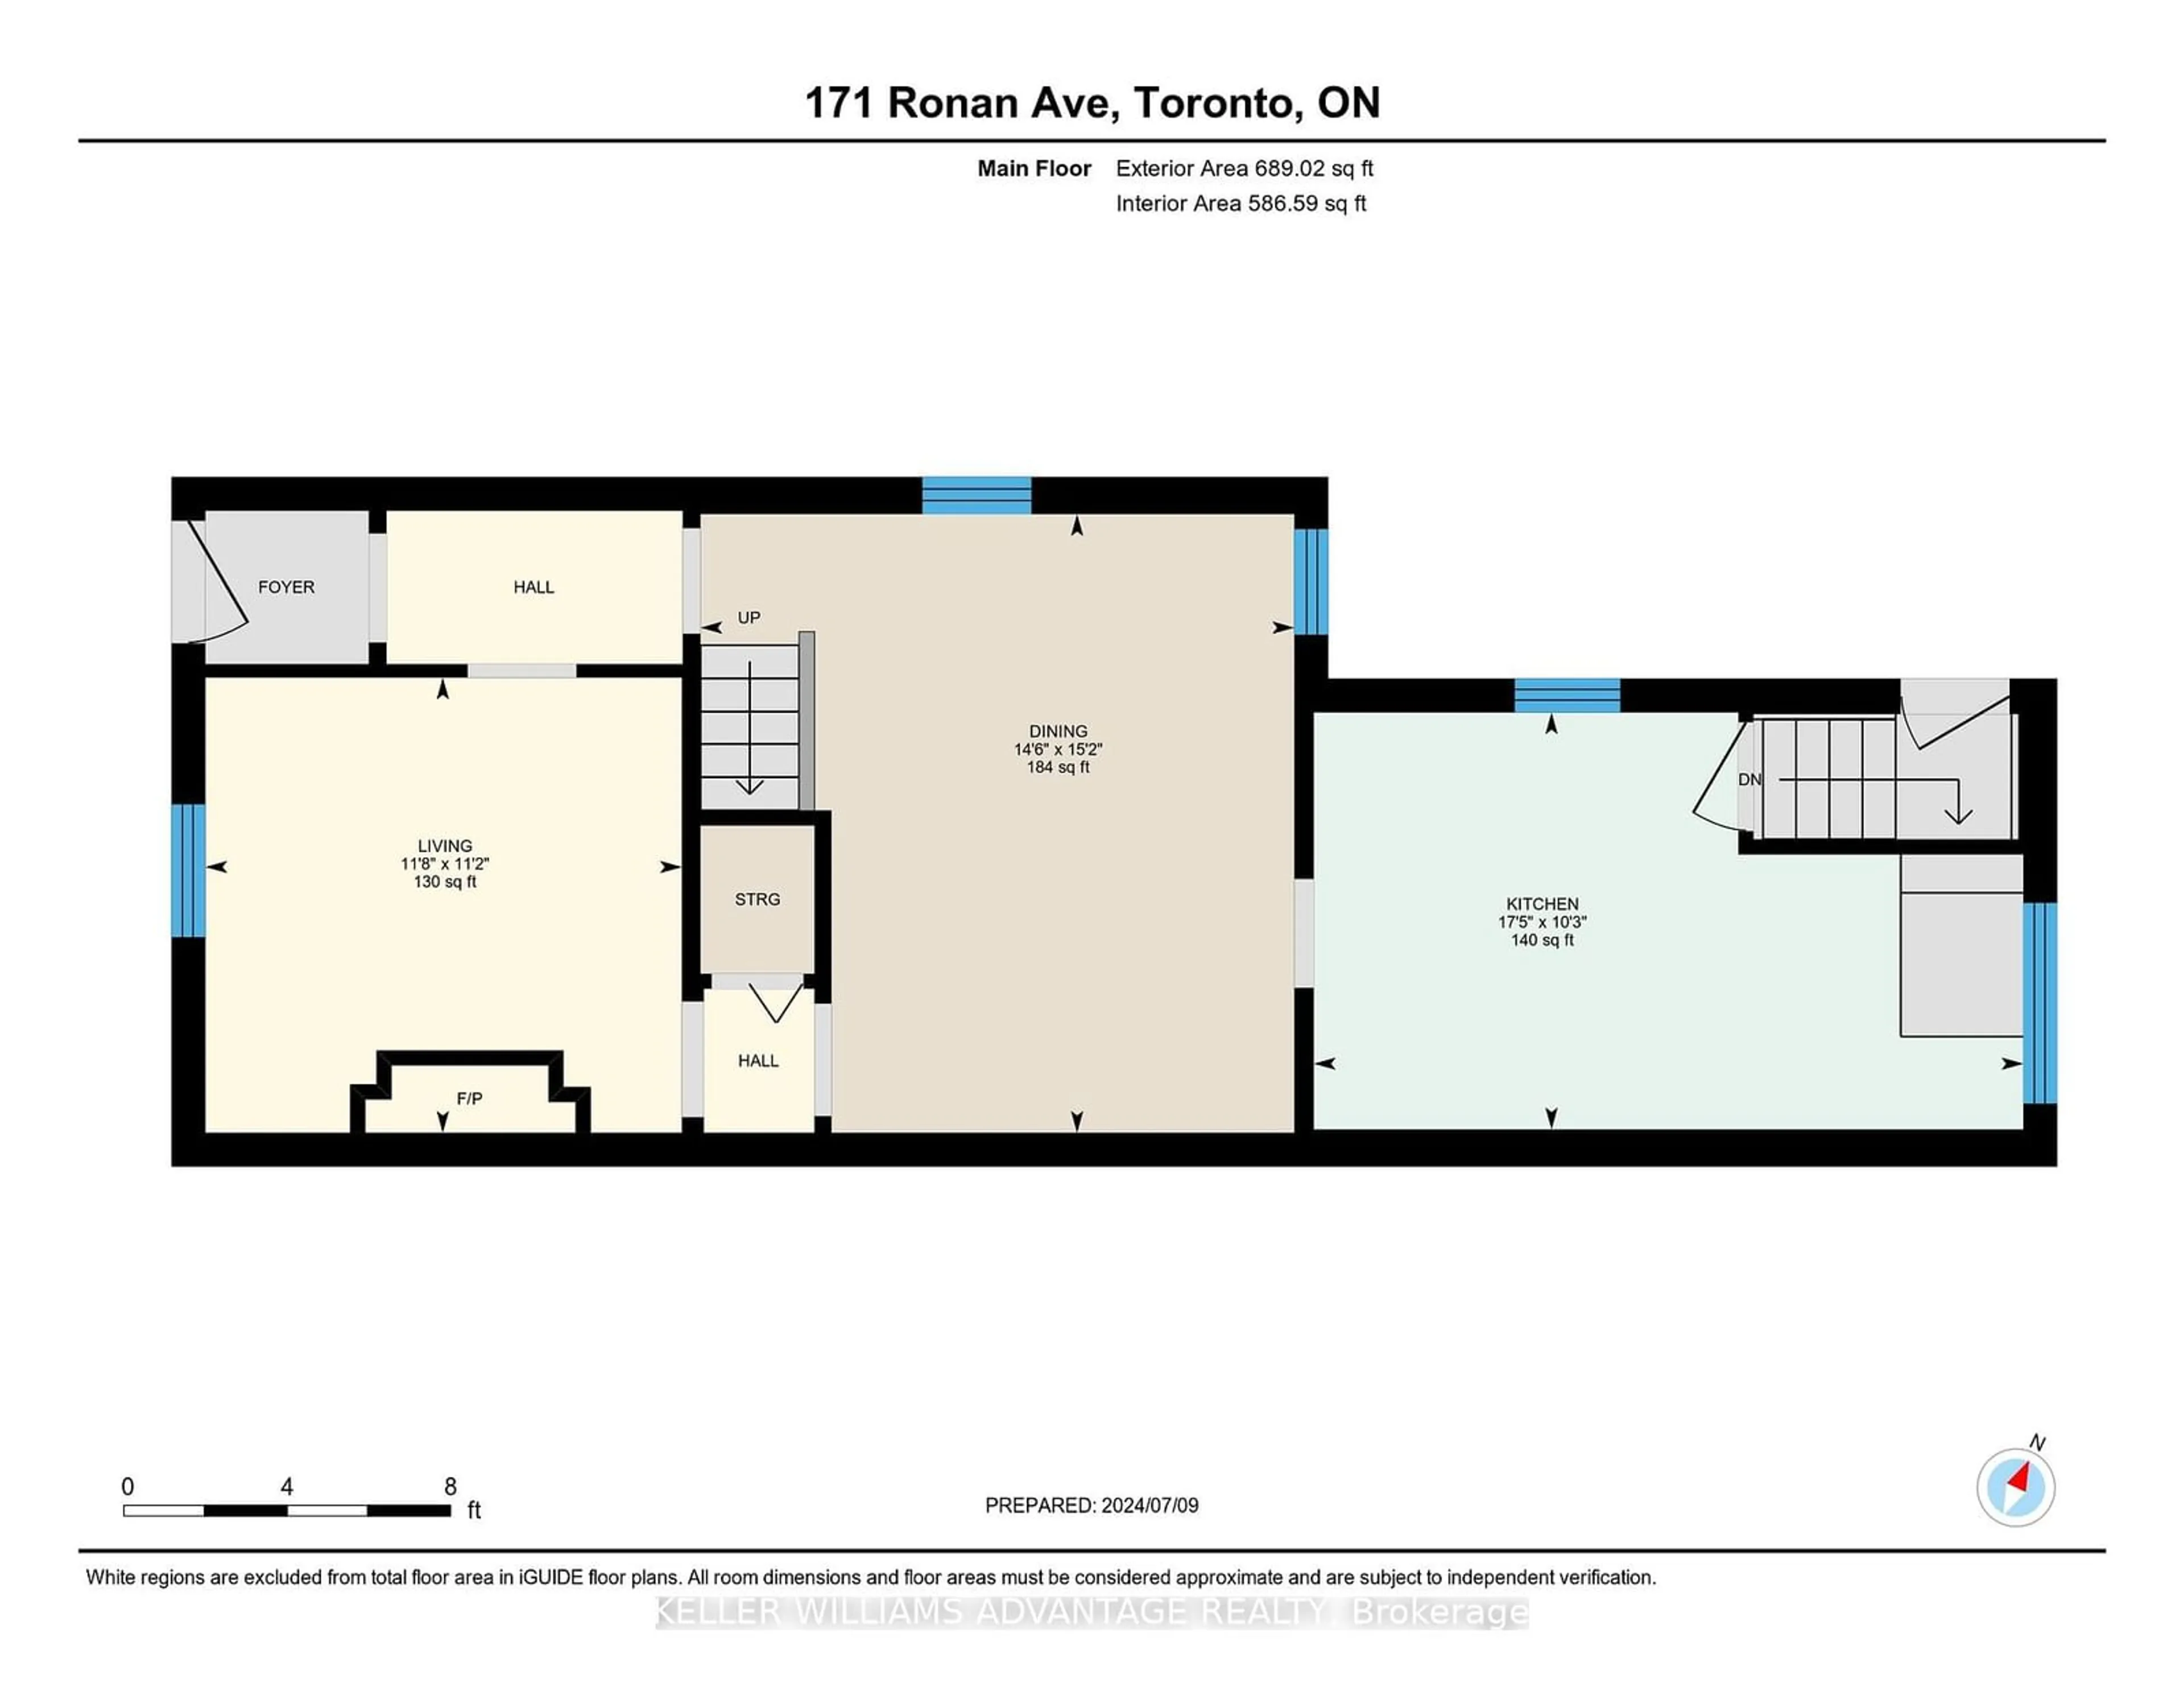 Floor plan for 171 Ronan Ave, Toronto Ontario M4N 2Y5